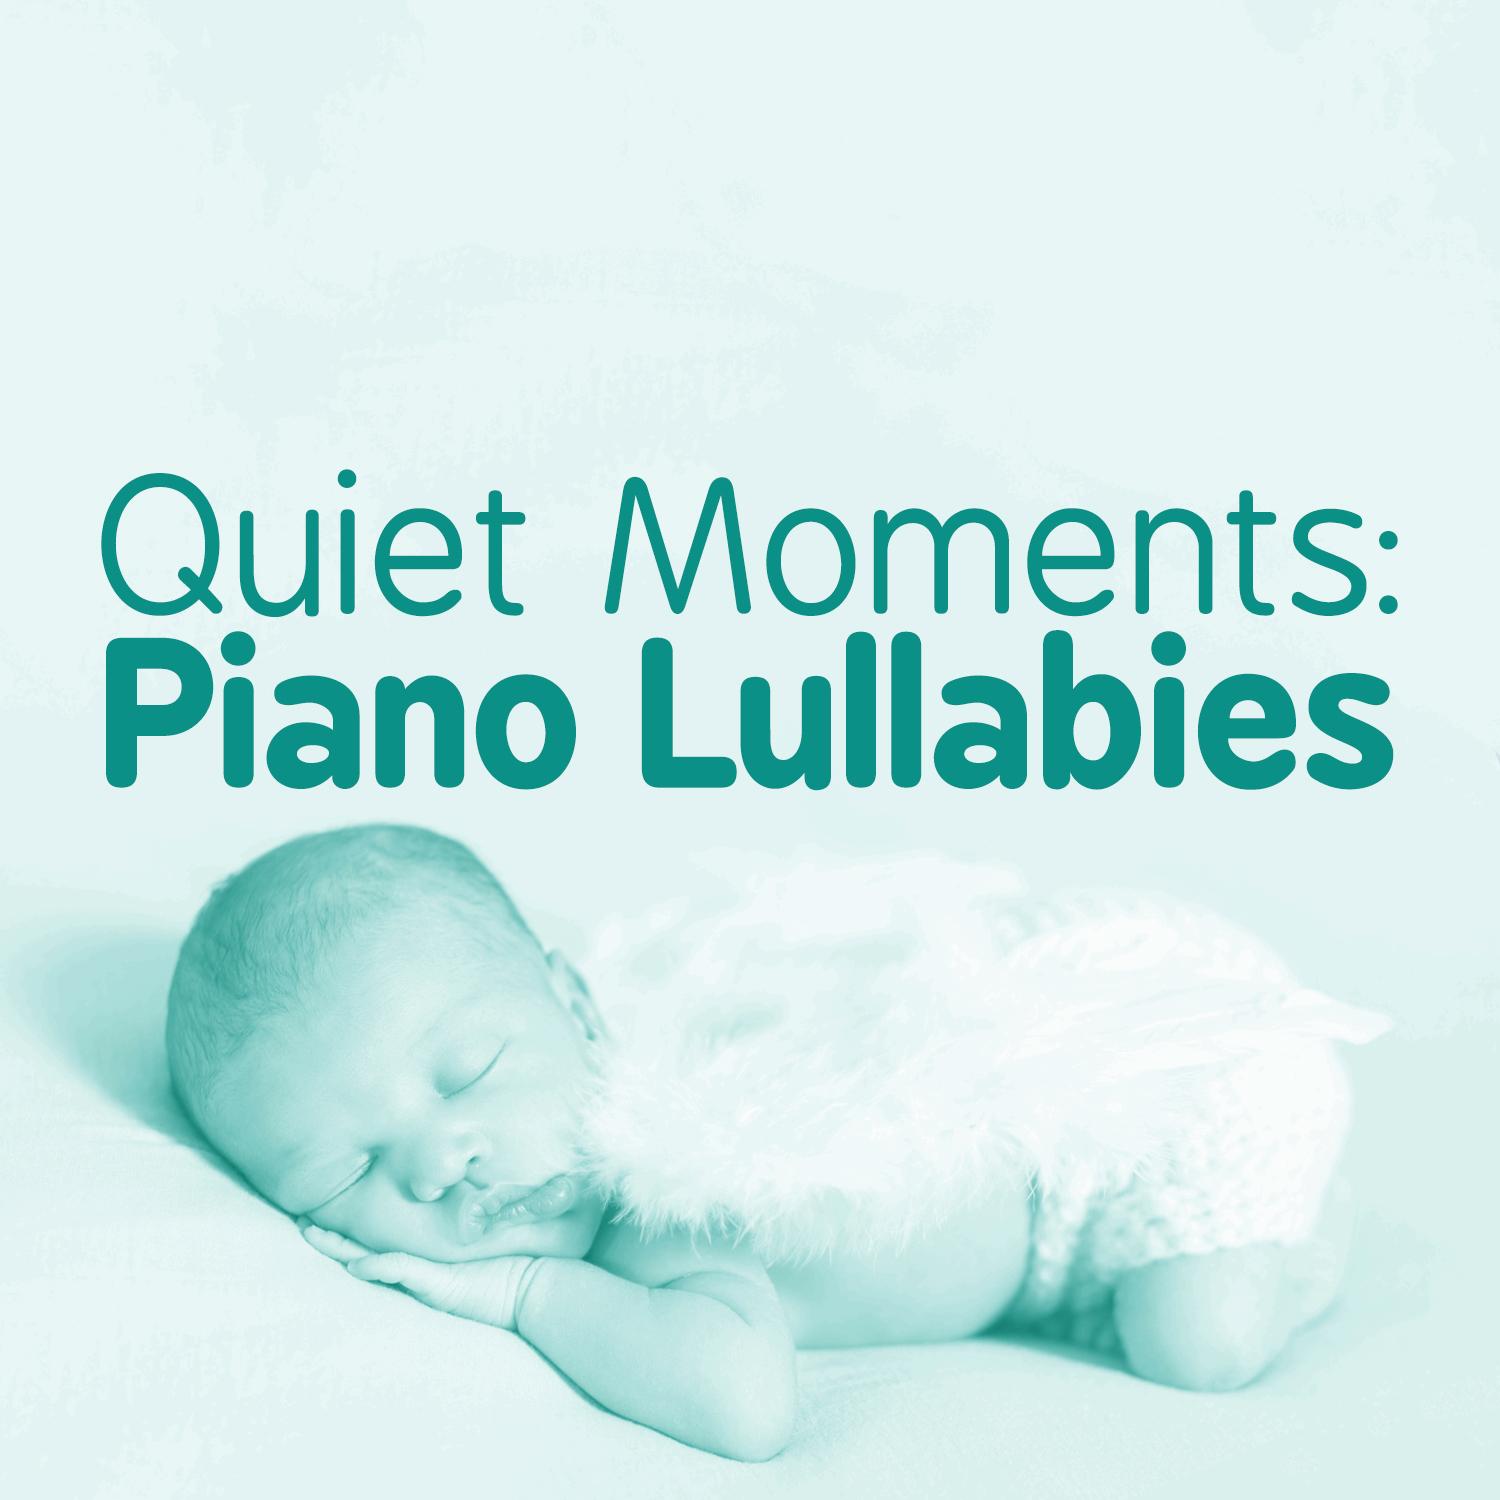 Quiet Moments: Piano Lullabies